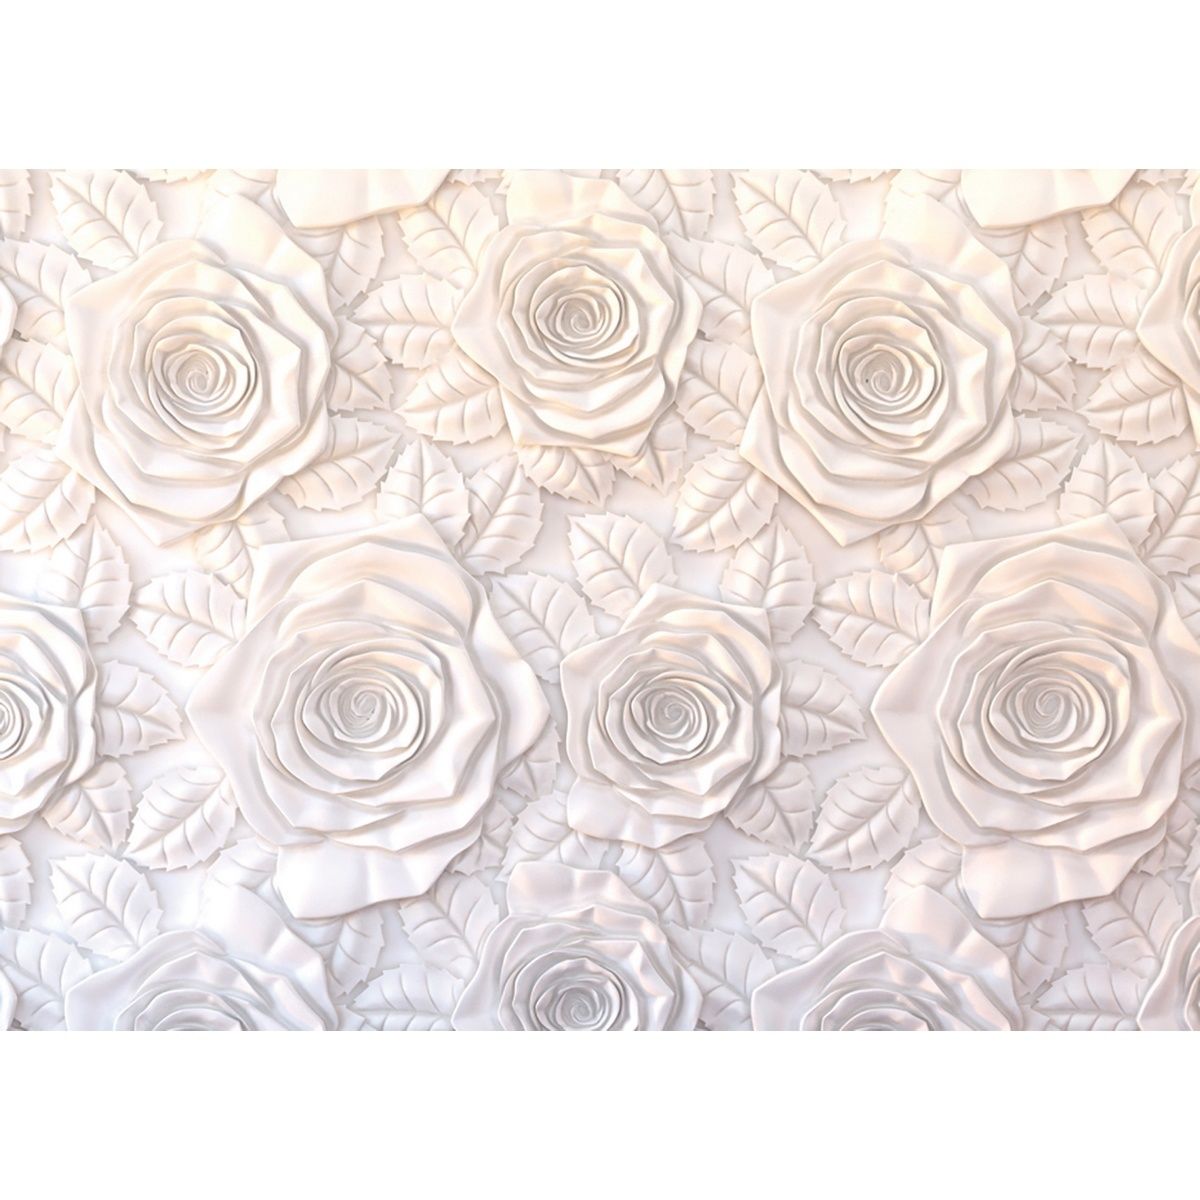 Fototapeta XXL Wall of roses 360 x 254 cm, 8 dílů - 4home.cz